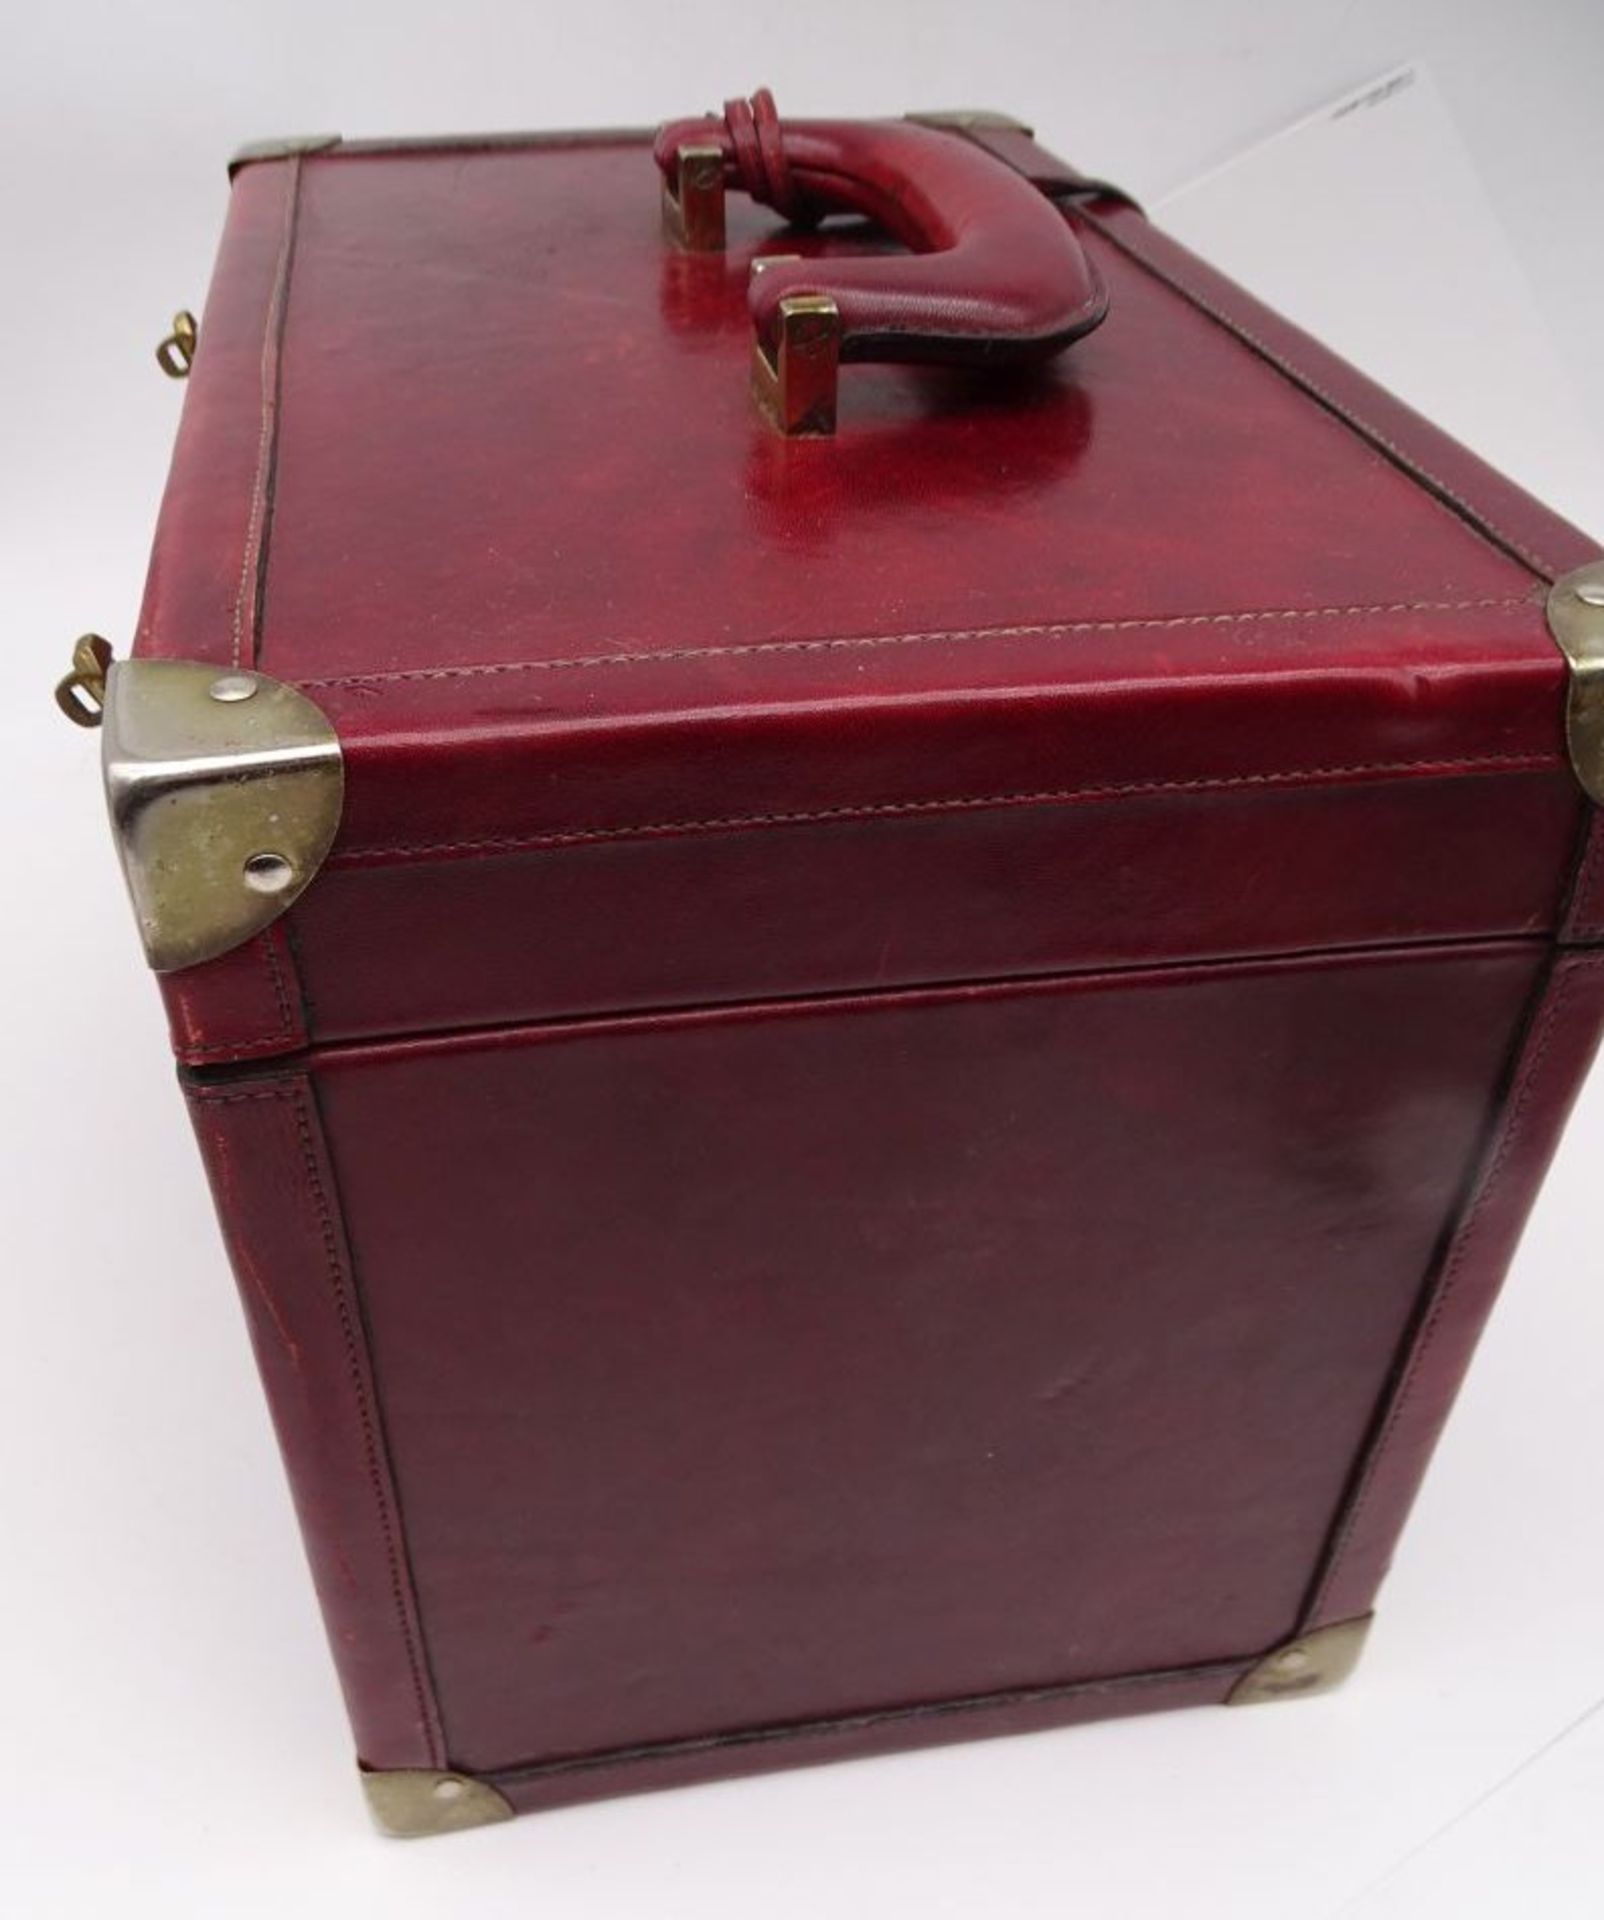 AIGNER Leder Kosmetikkoffer Schmuckkoffer absperrbar Leder rot, Beauty Case, guter Zustand, H-24 cm - Image 6 of 7